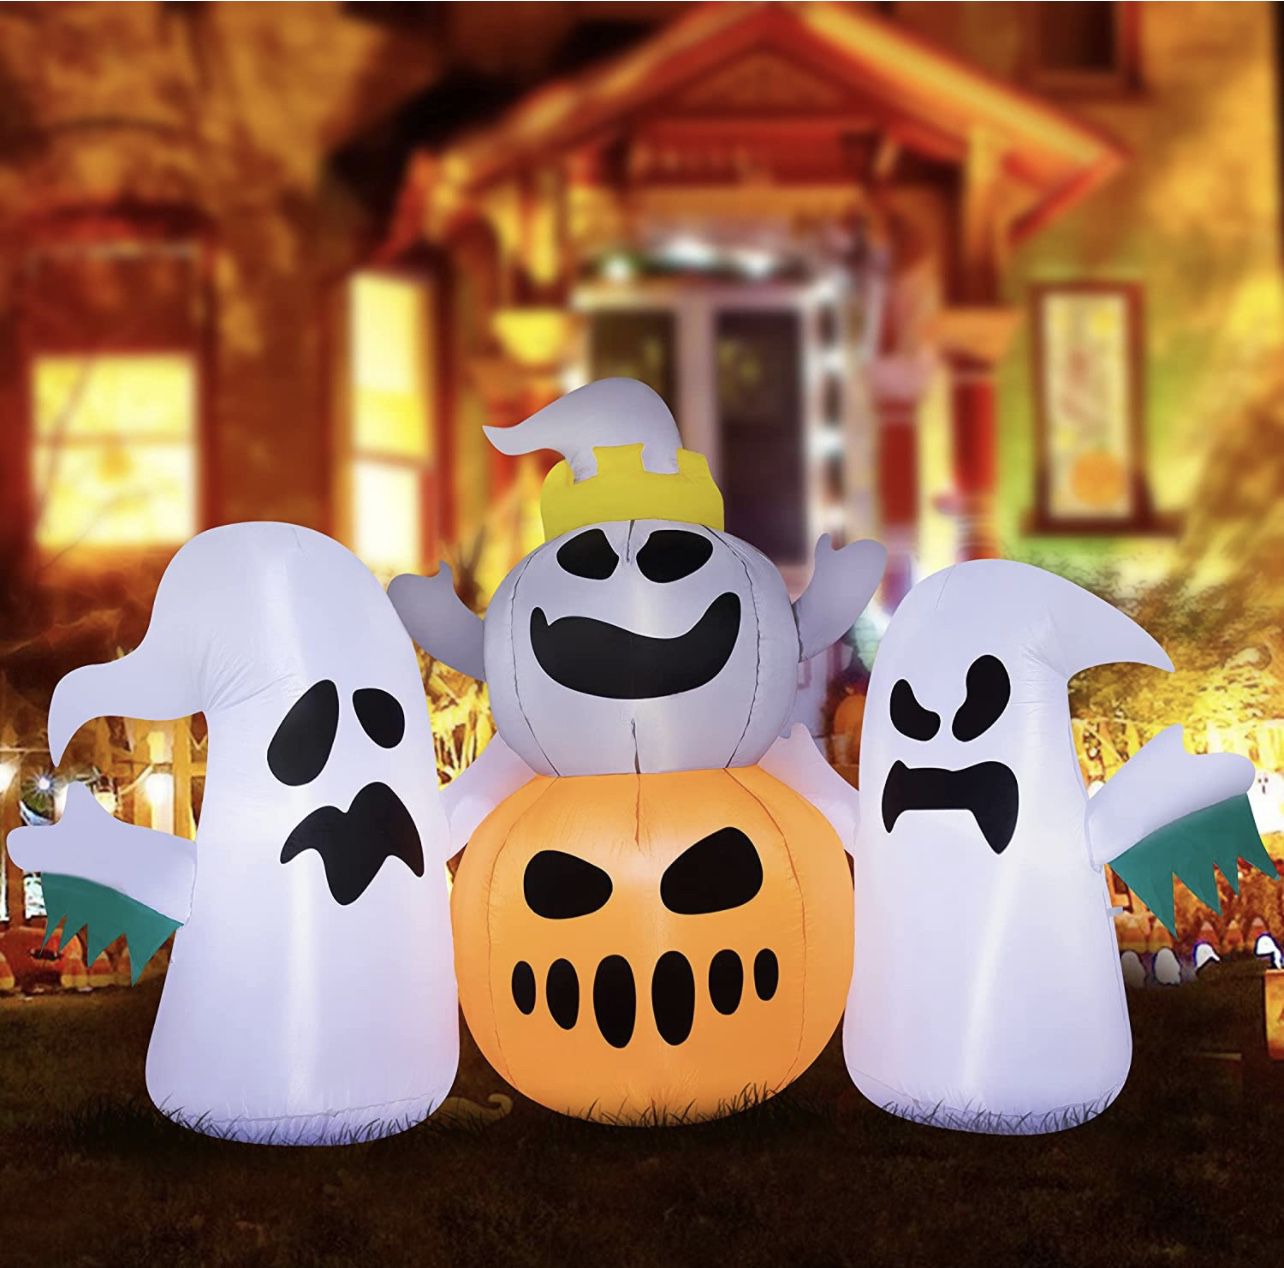 8 FT Halloween Inflatables 3 Little Ghosts with Pumpkins Outdoor Halloween Decorations